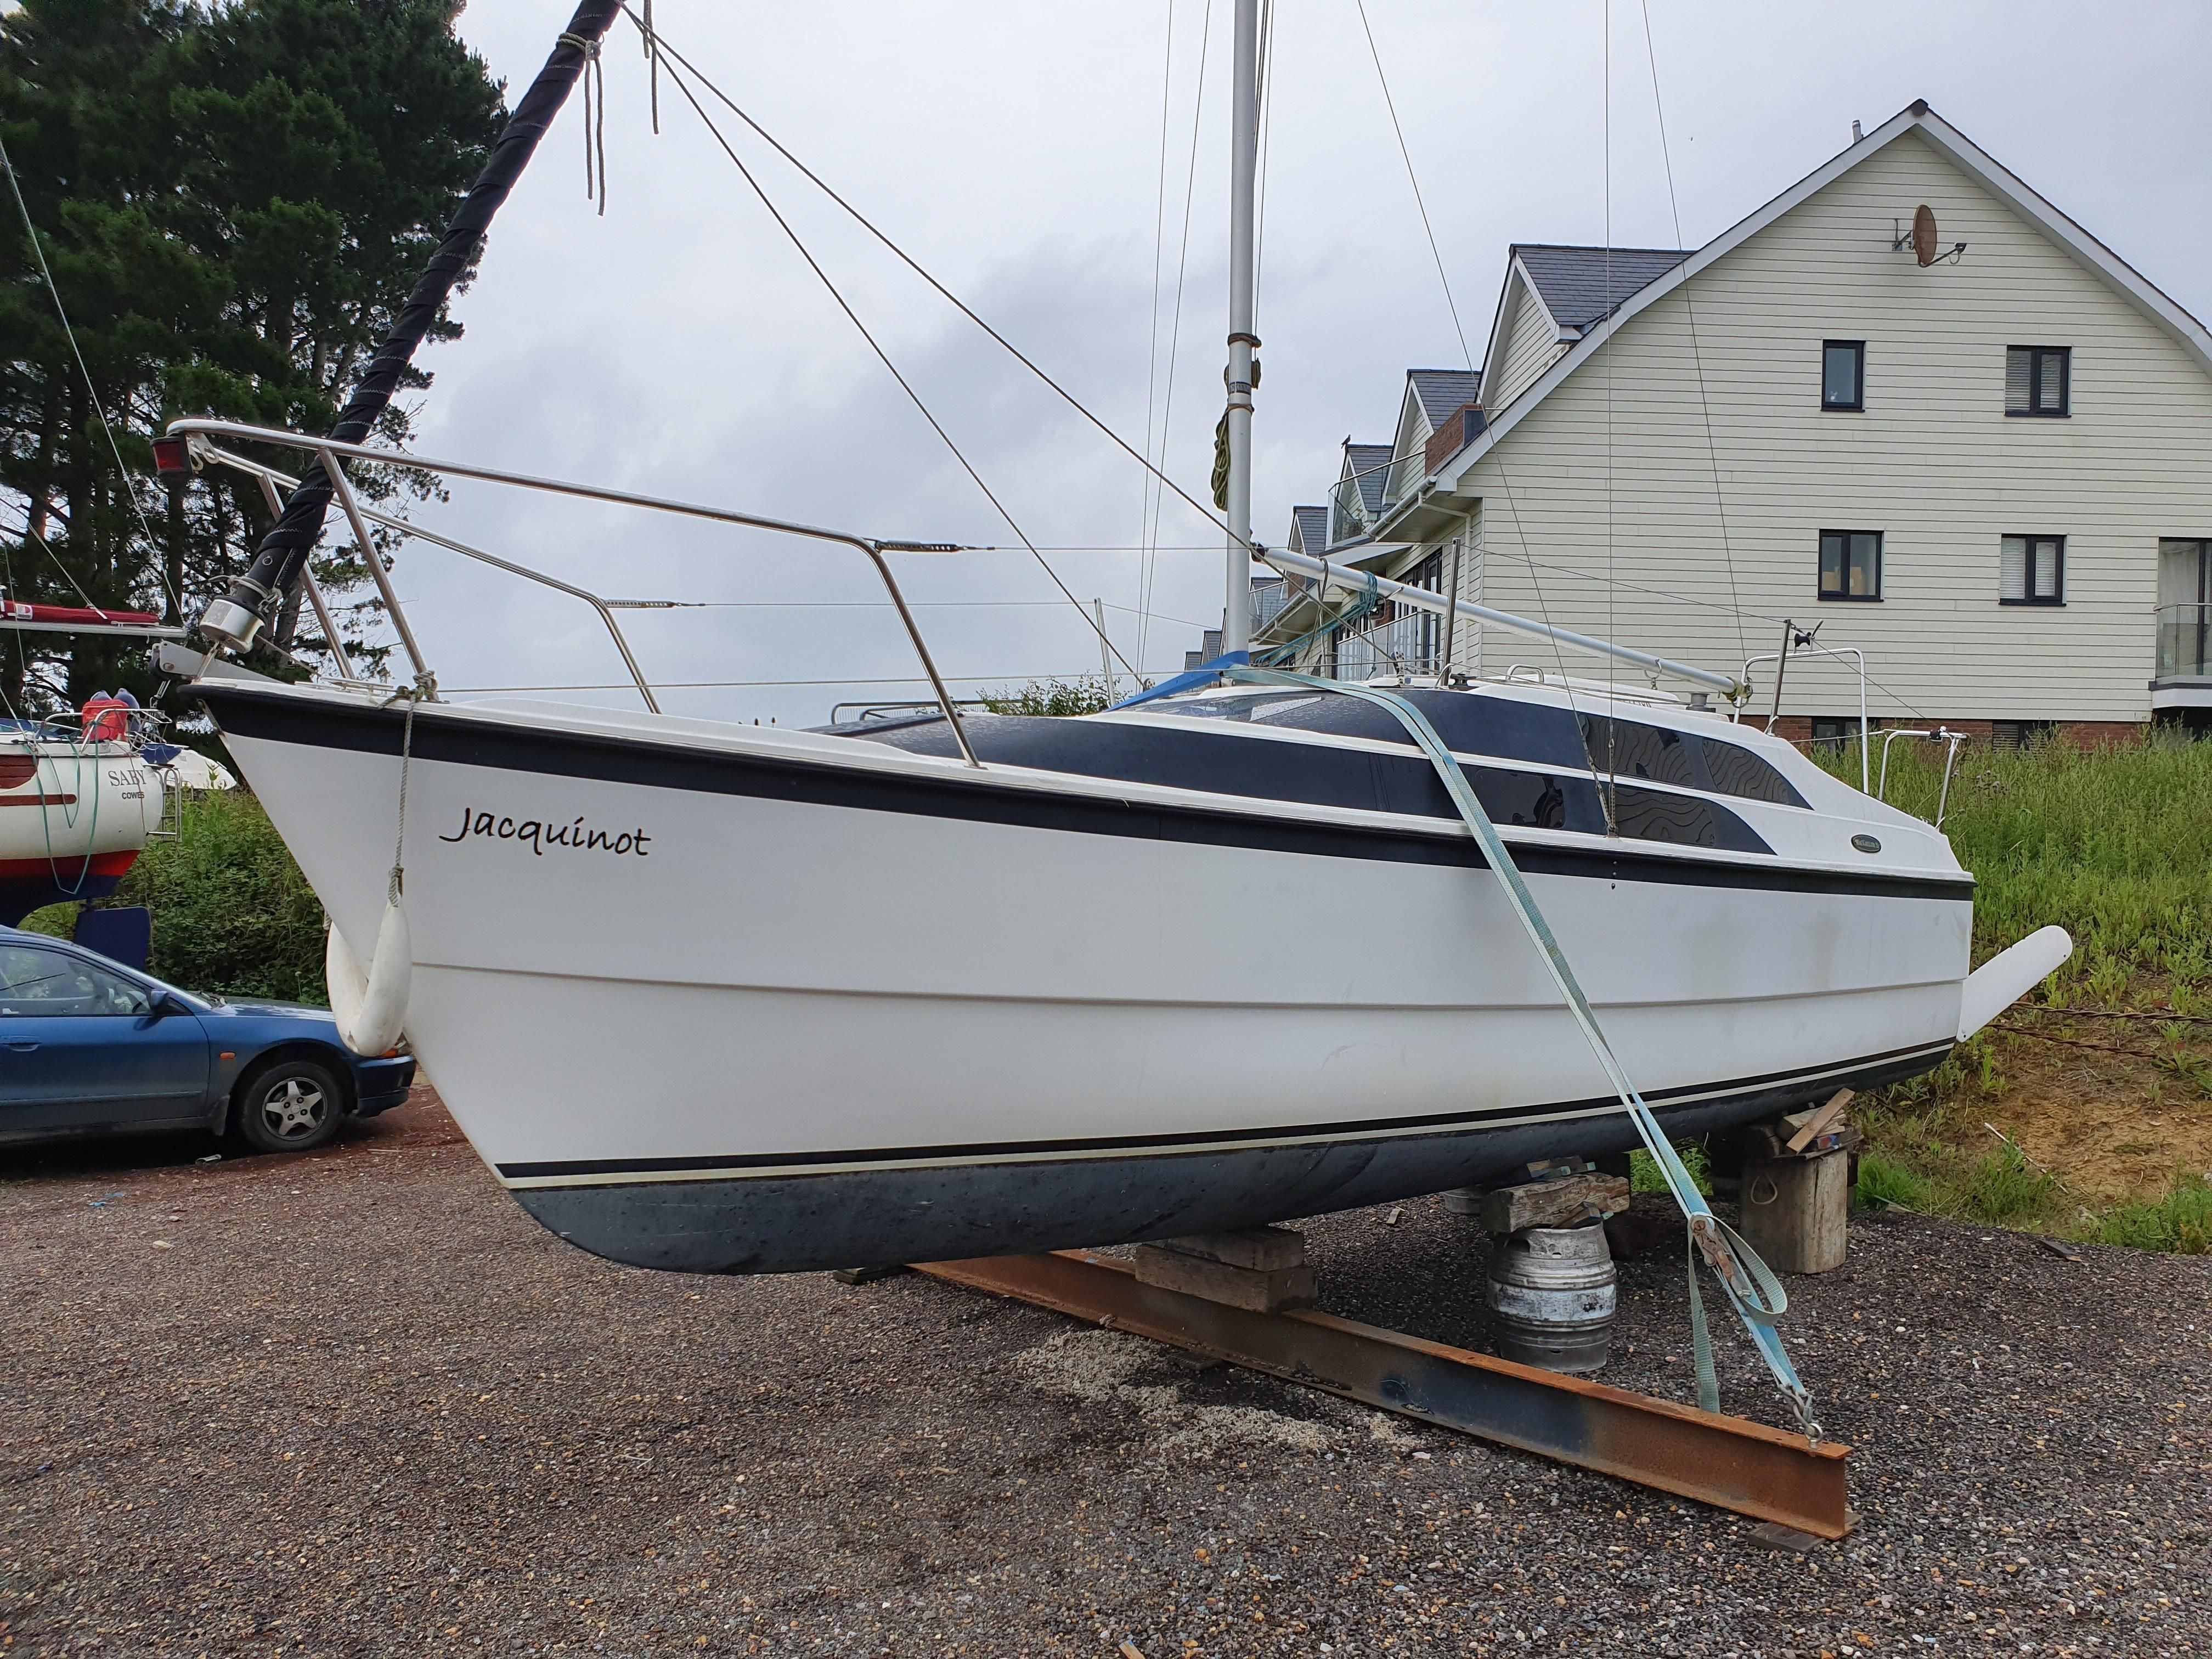 macgregor 26 foot sailboat for sale